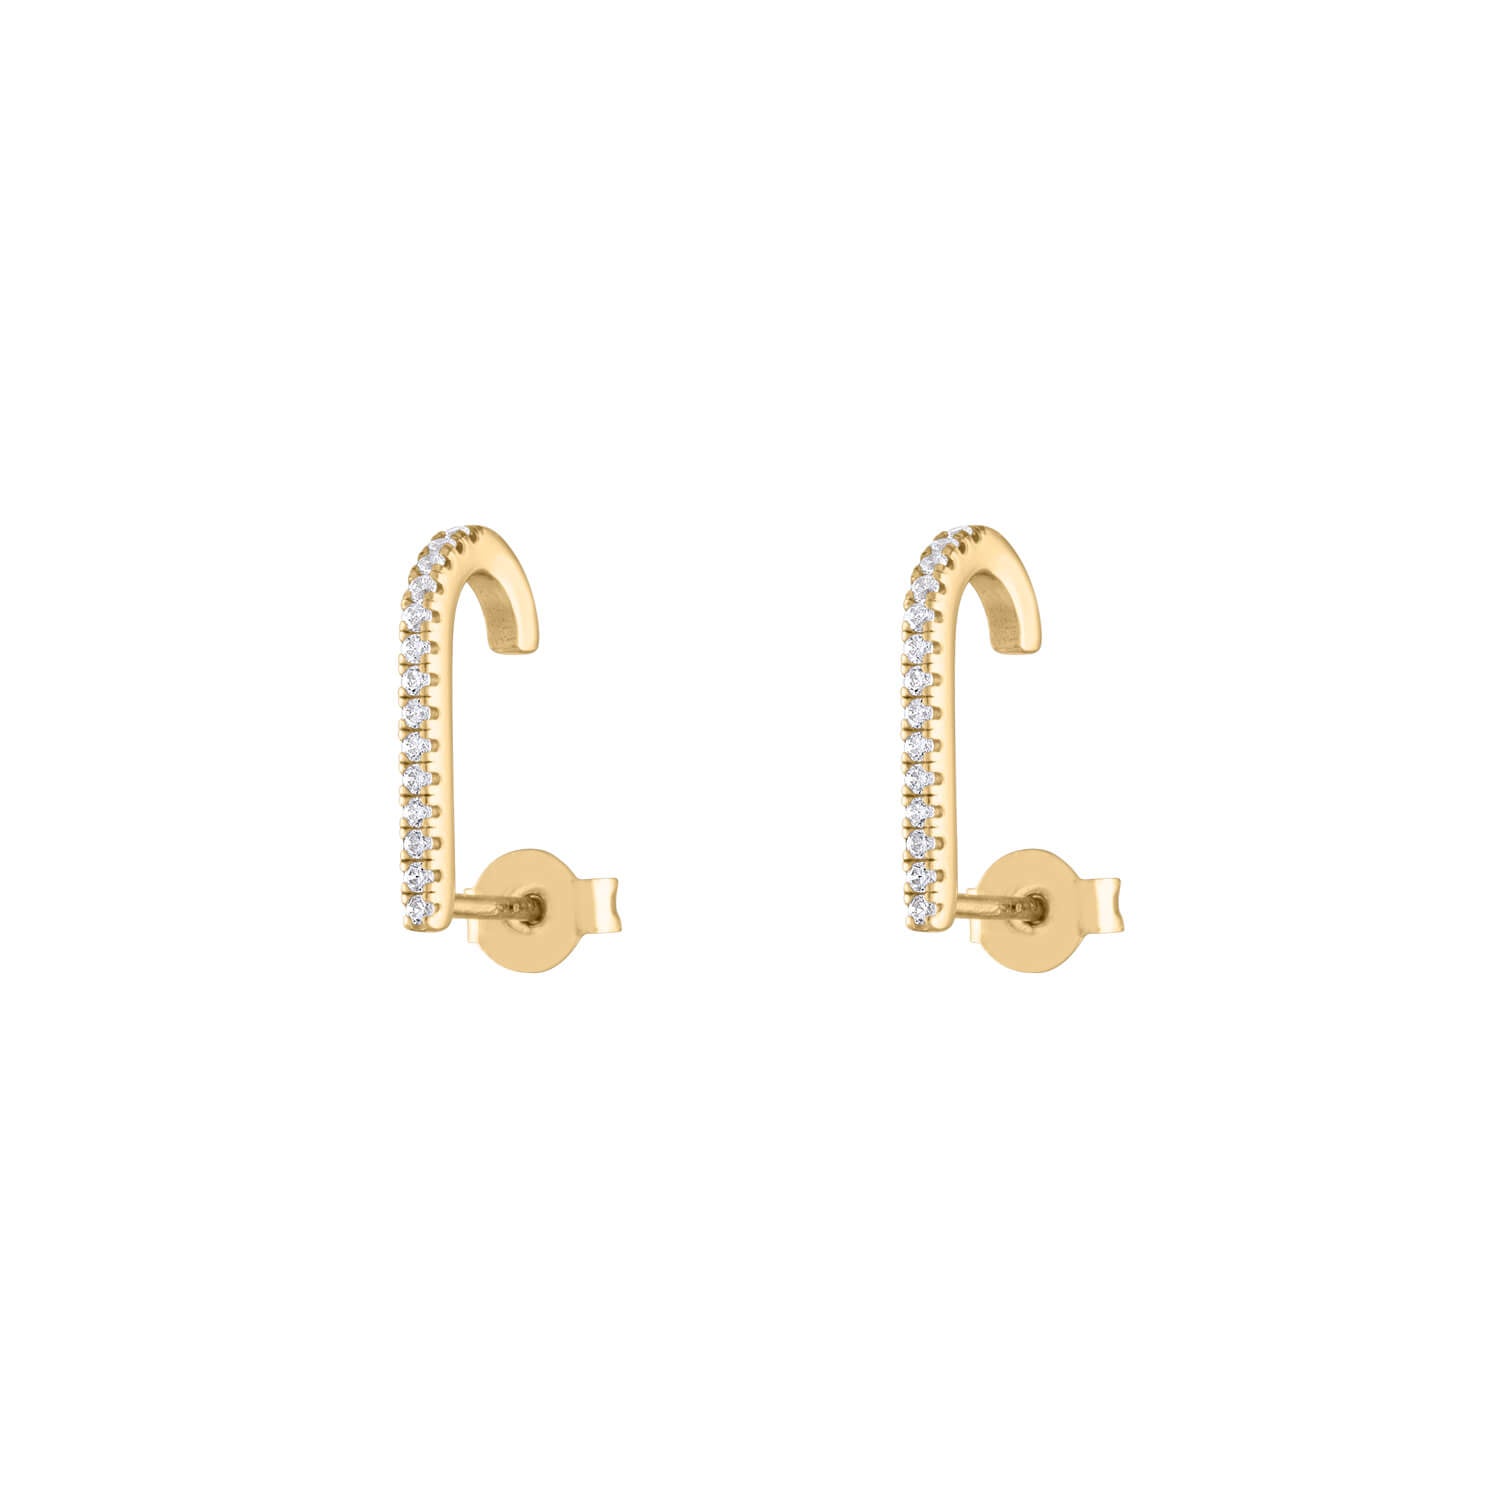 Celestial Hook Earrings in Gold Vermeil